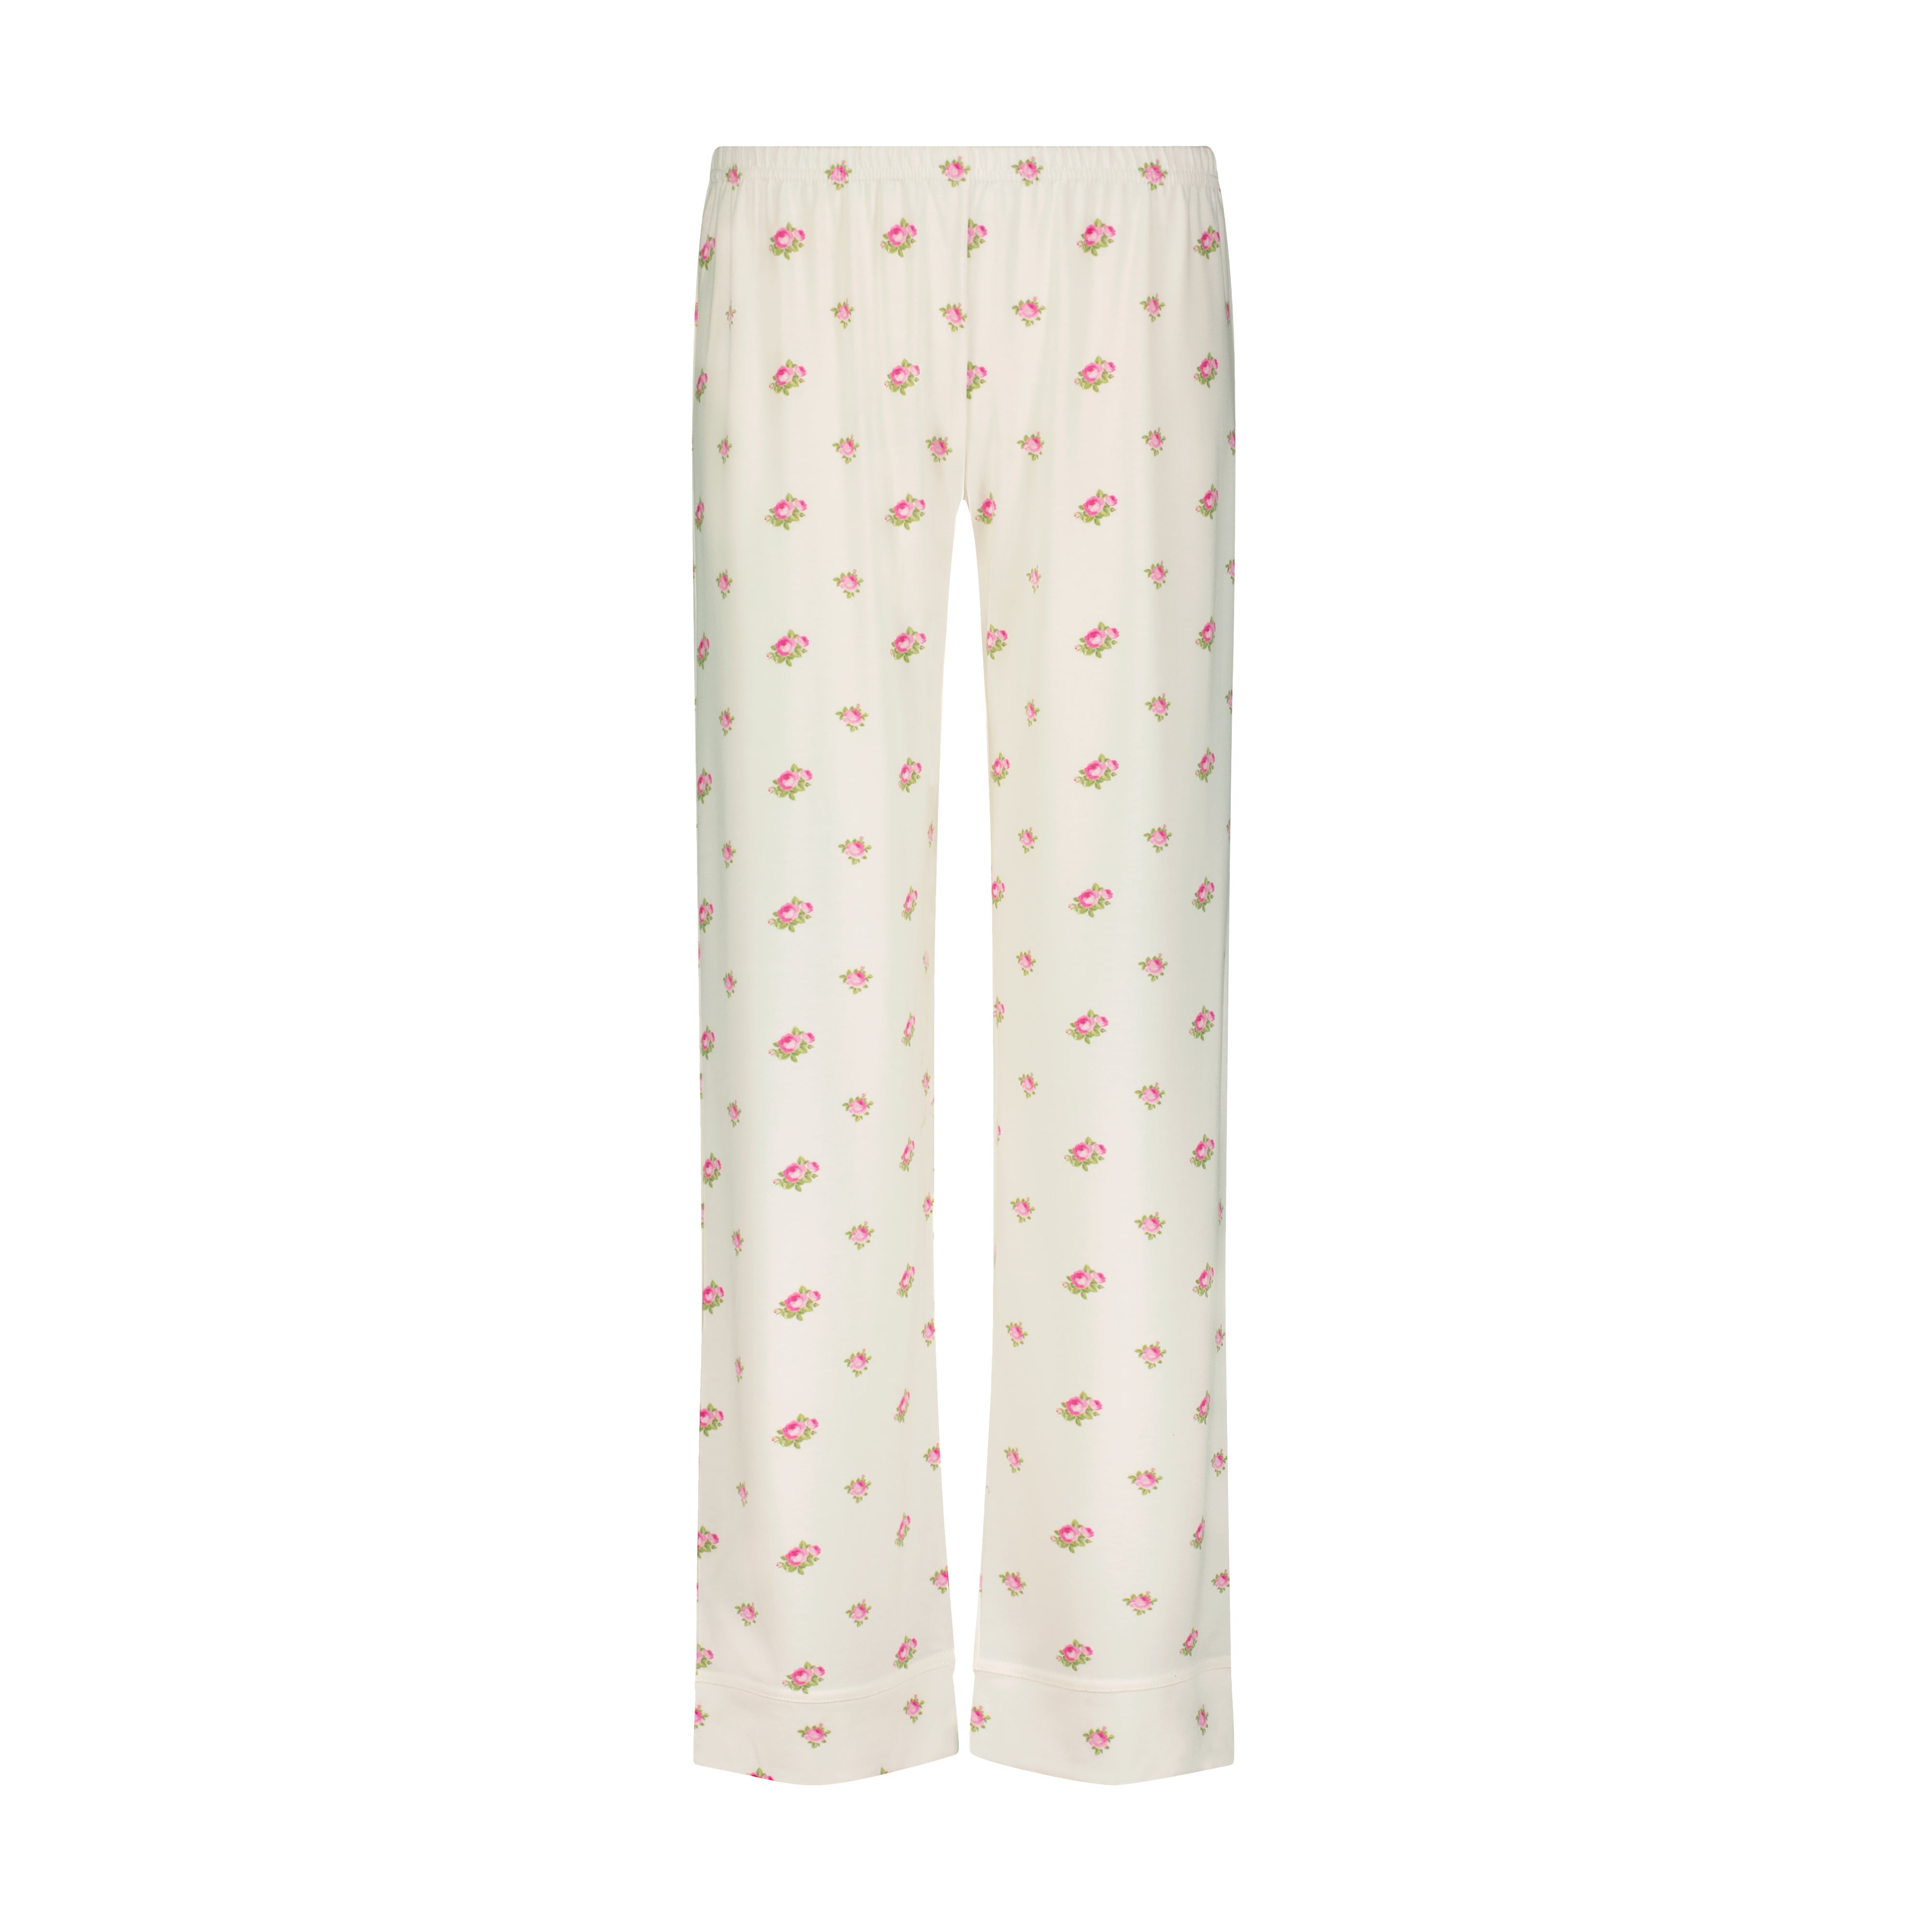 CHARLEY Pajama Set in Cream Vintage Rose Print -NEW COLOR